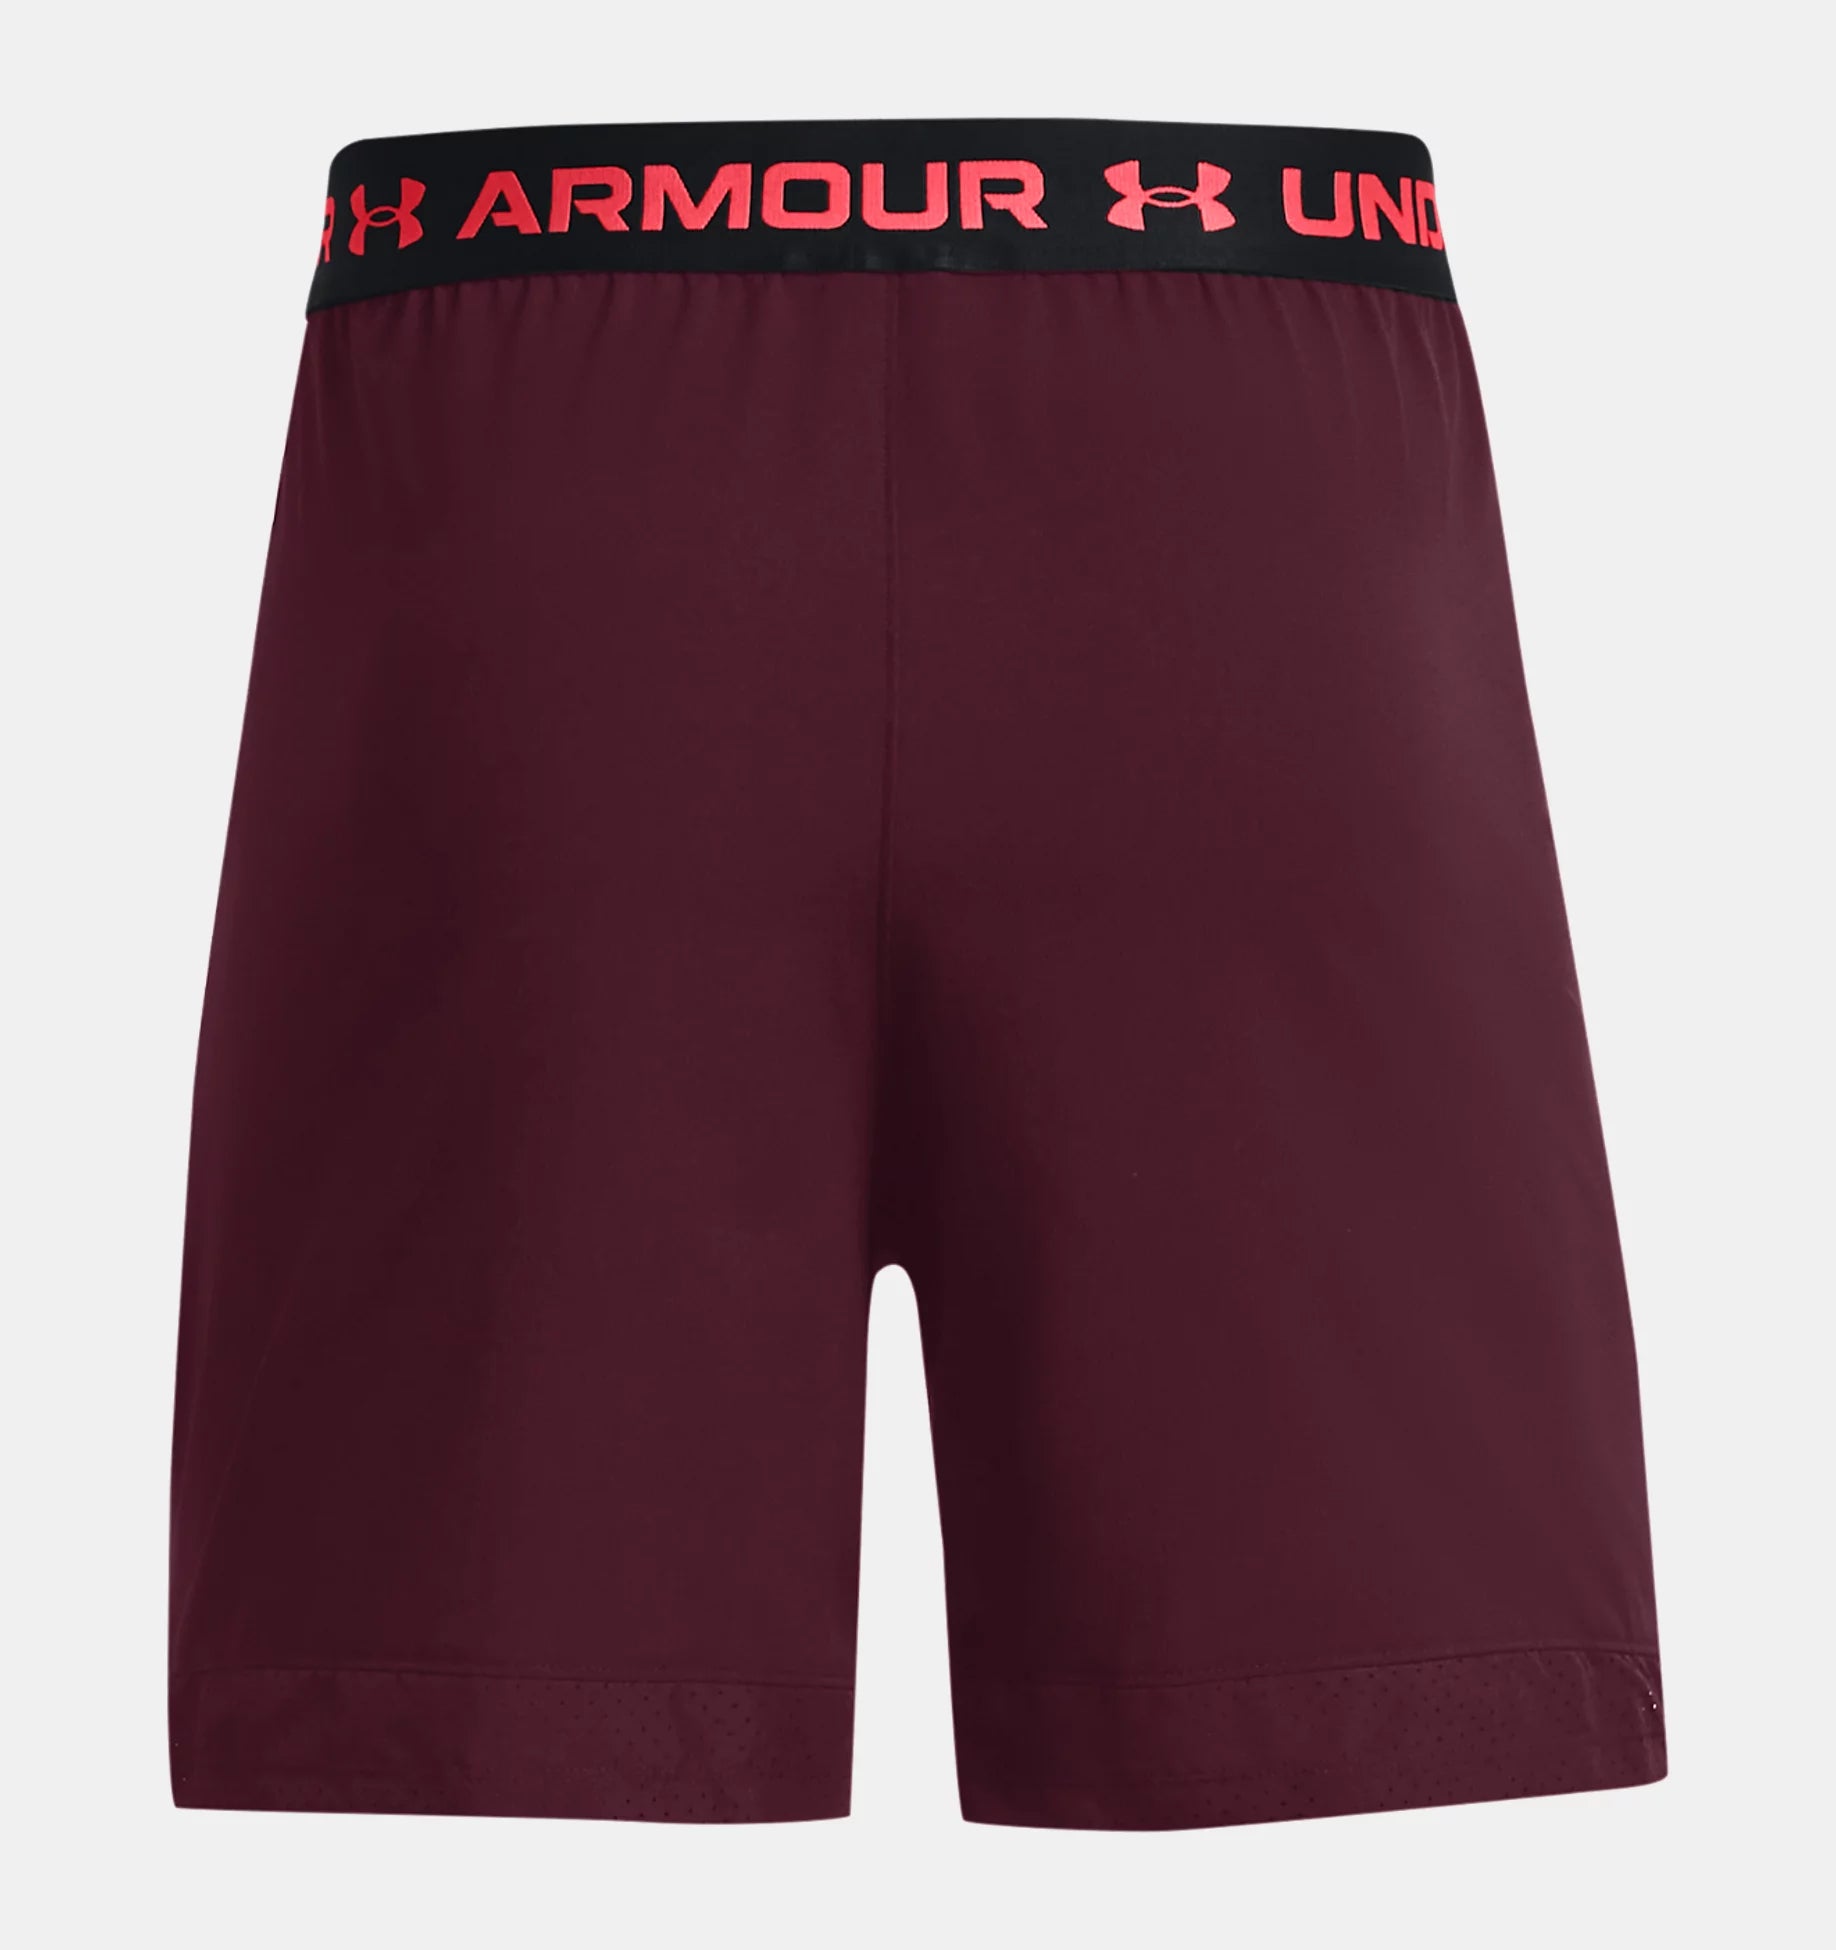 Under Armour Vanish Woven Shorts 15 cm - Pantaloncini Da Uomo - Neverland Firenze